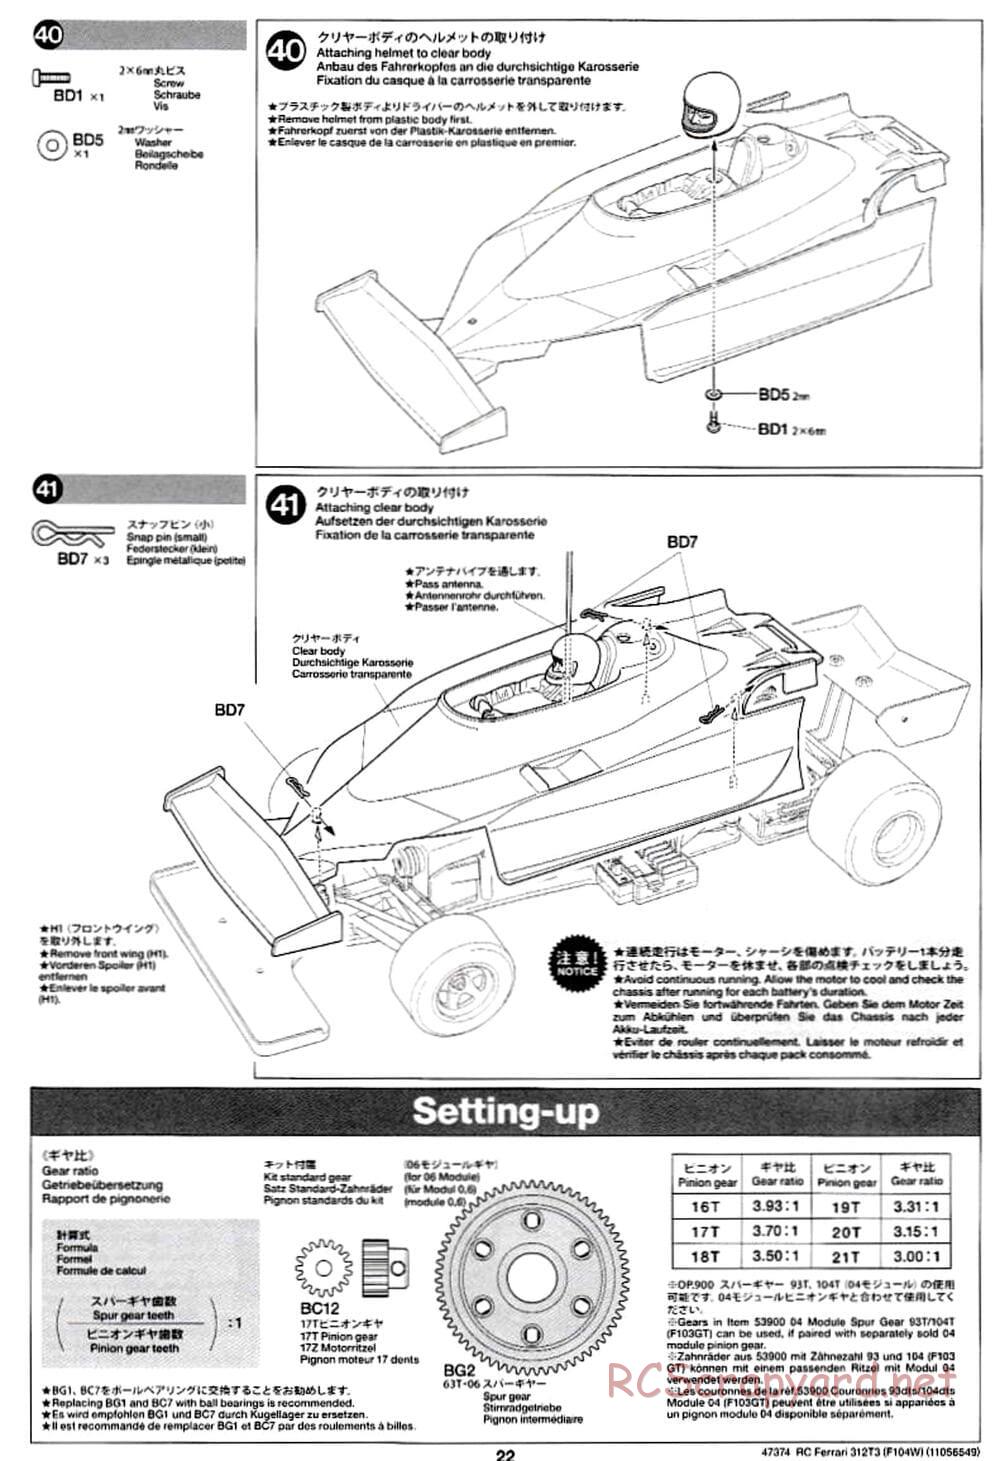 Tamiya - Ferrari 312T3 - F104W Chassis - Manual - Page 22